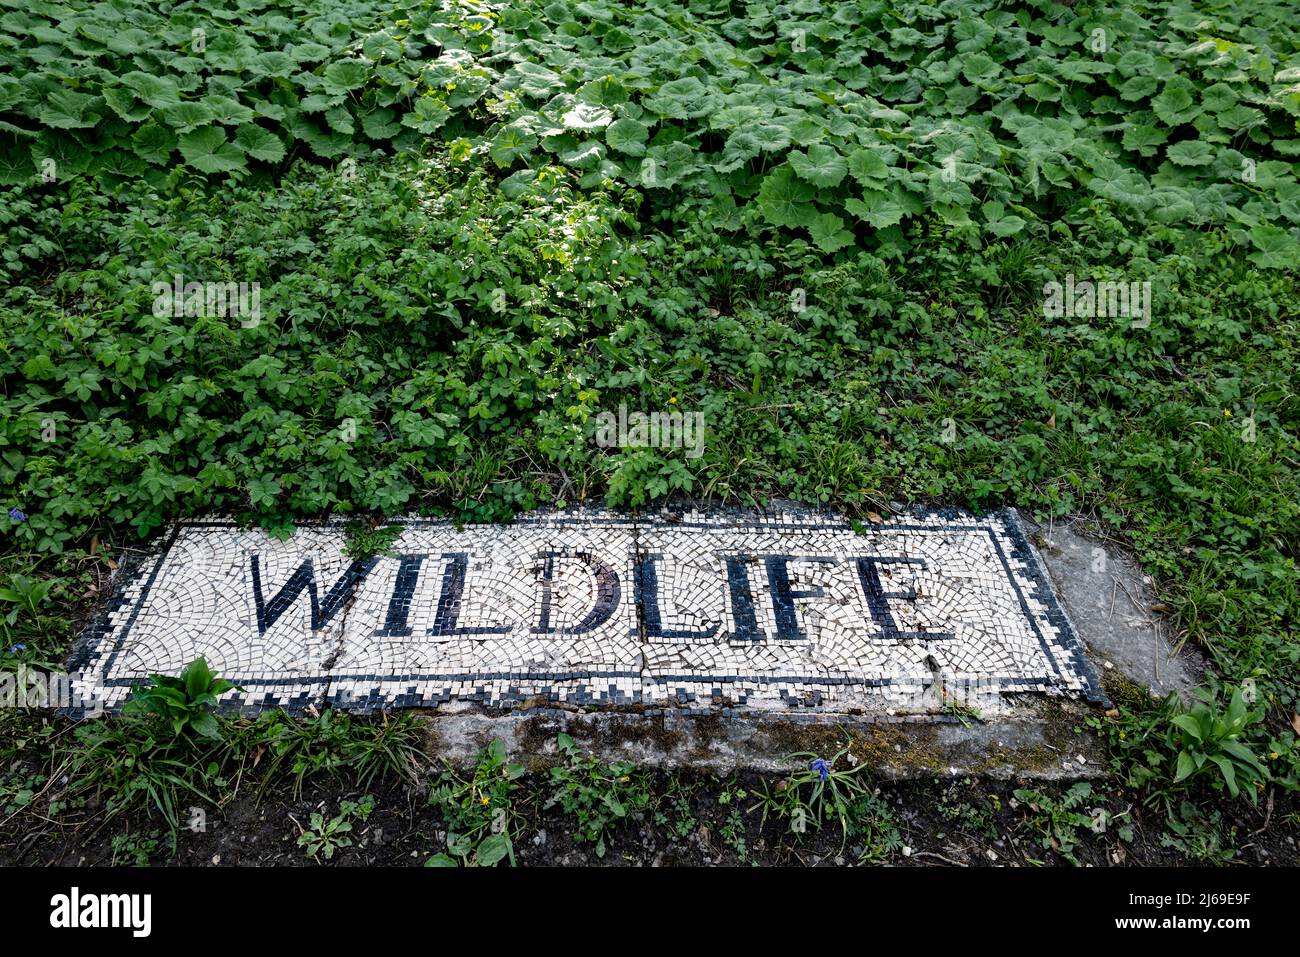 Wildlife artwork mosaic by the River Ribble, Clitheroe, Lancashire, UK. Stock Photo